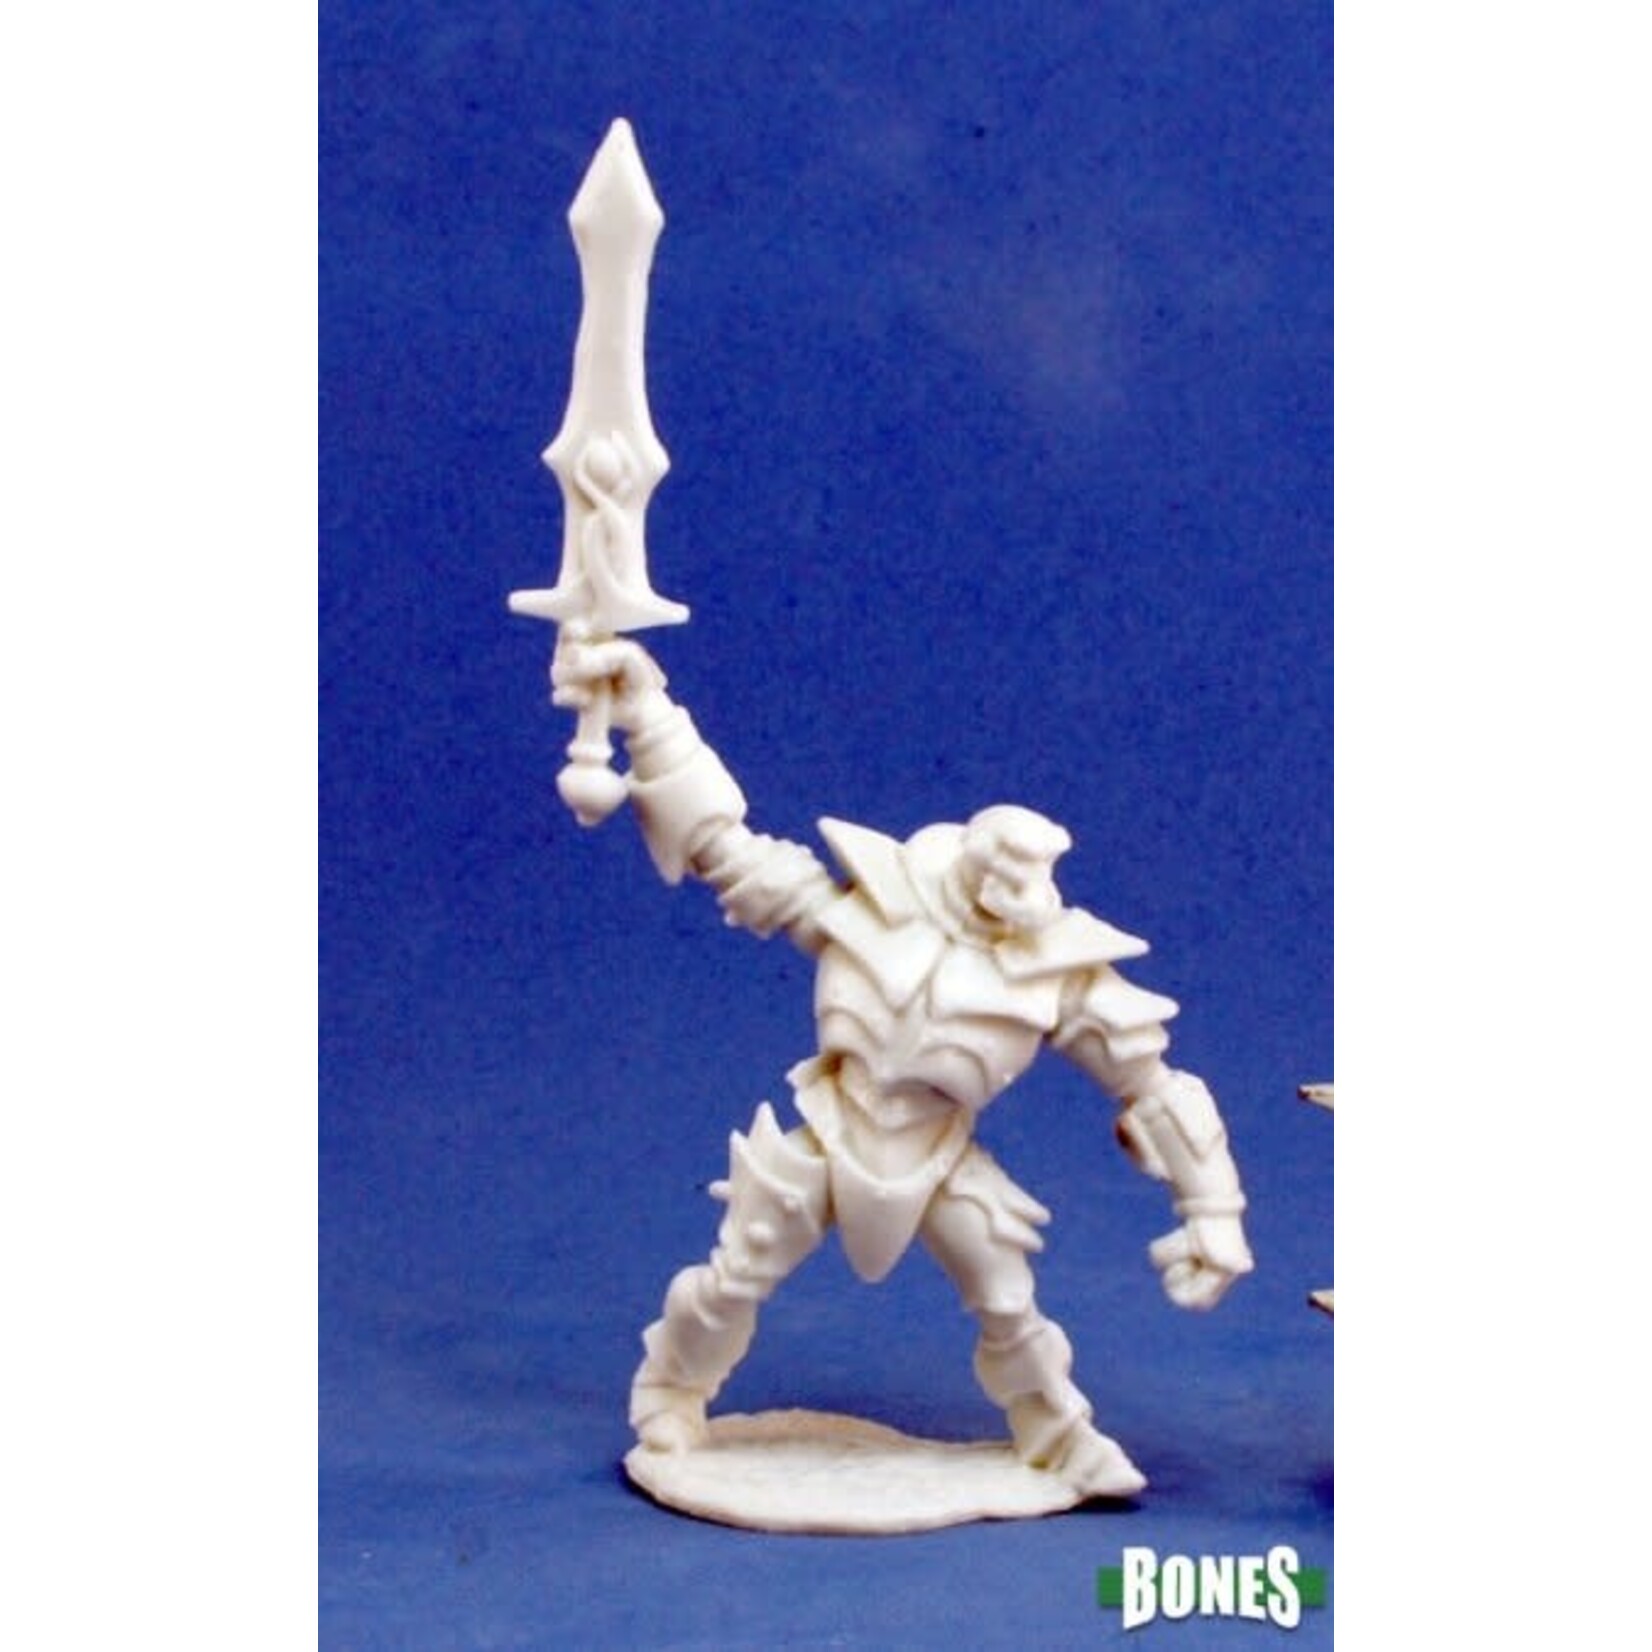 Reaper Miniatures Bones: Battleguard Golem